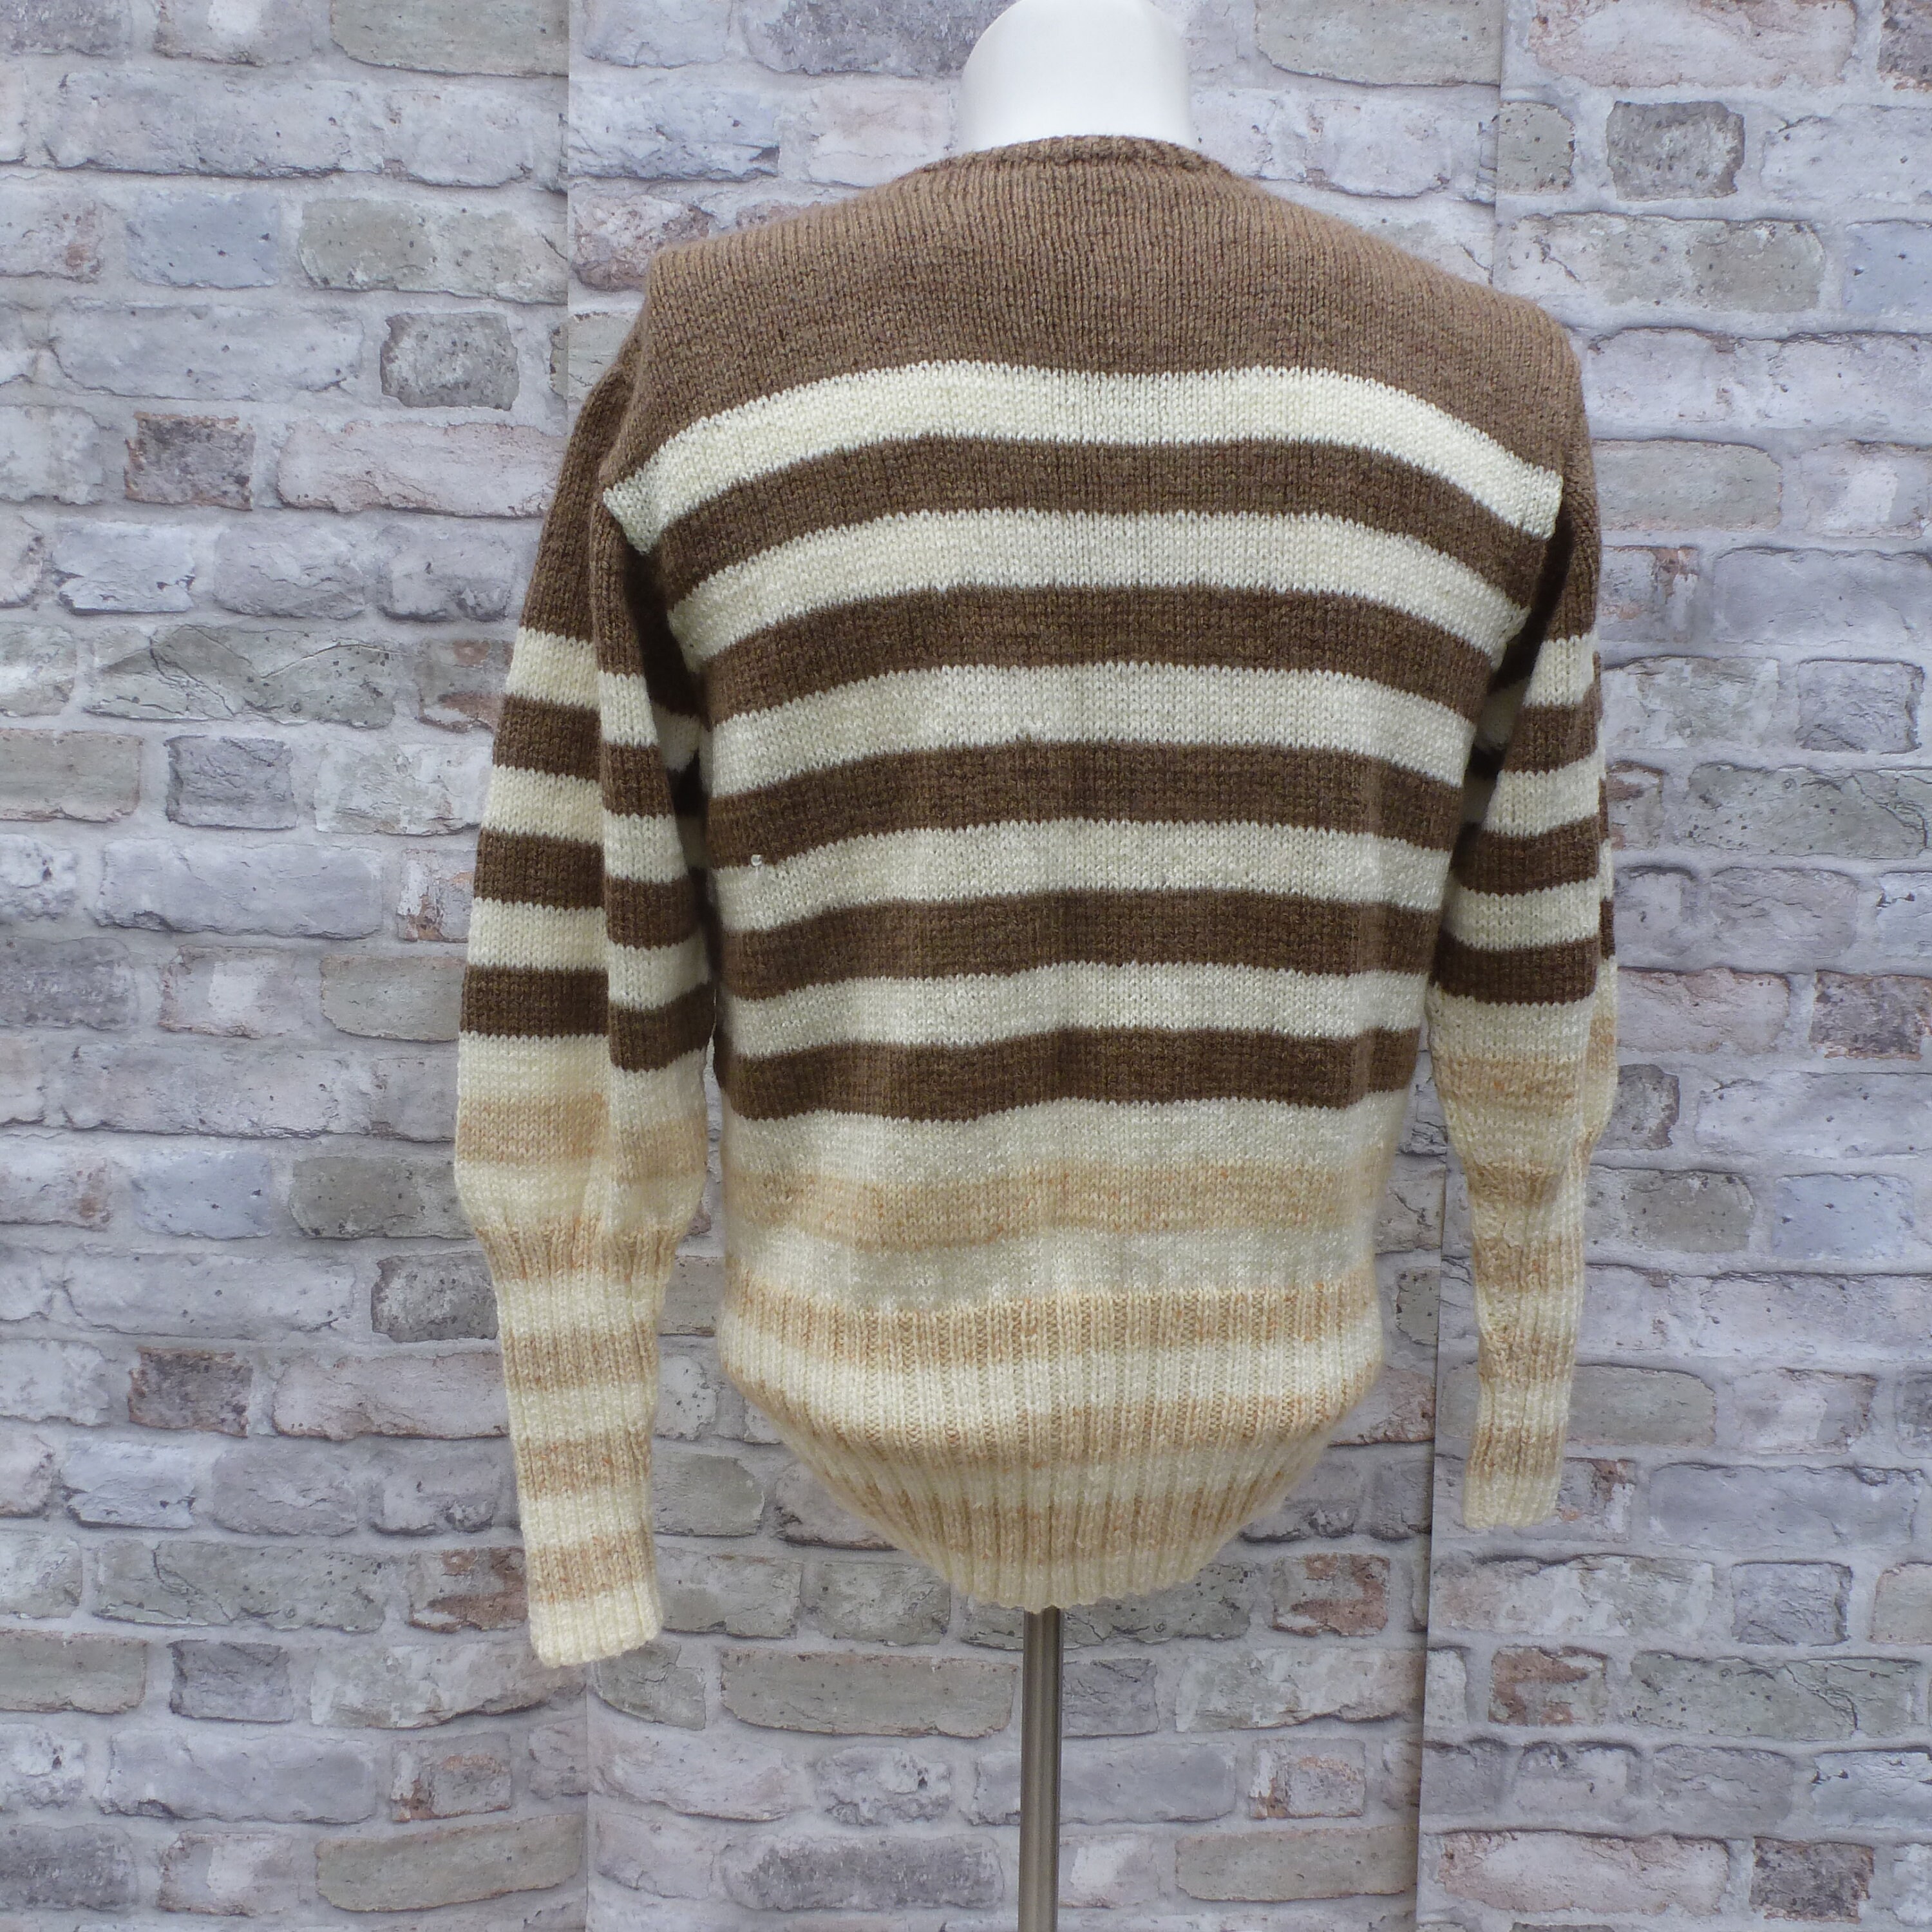 Jumper Knit Sweater Vintage Clothing British 80s Handknit Top - Etsy